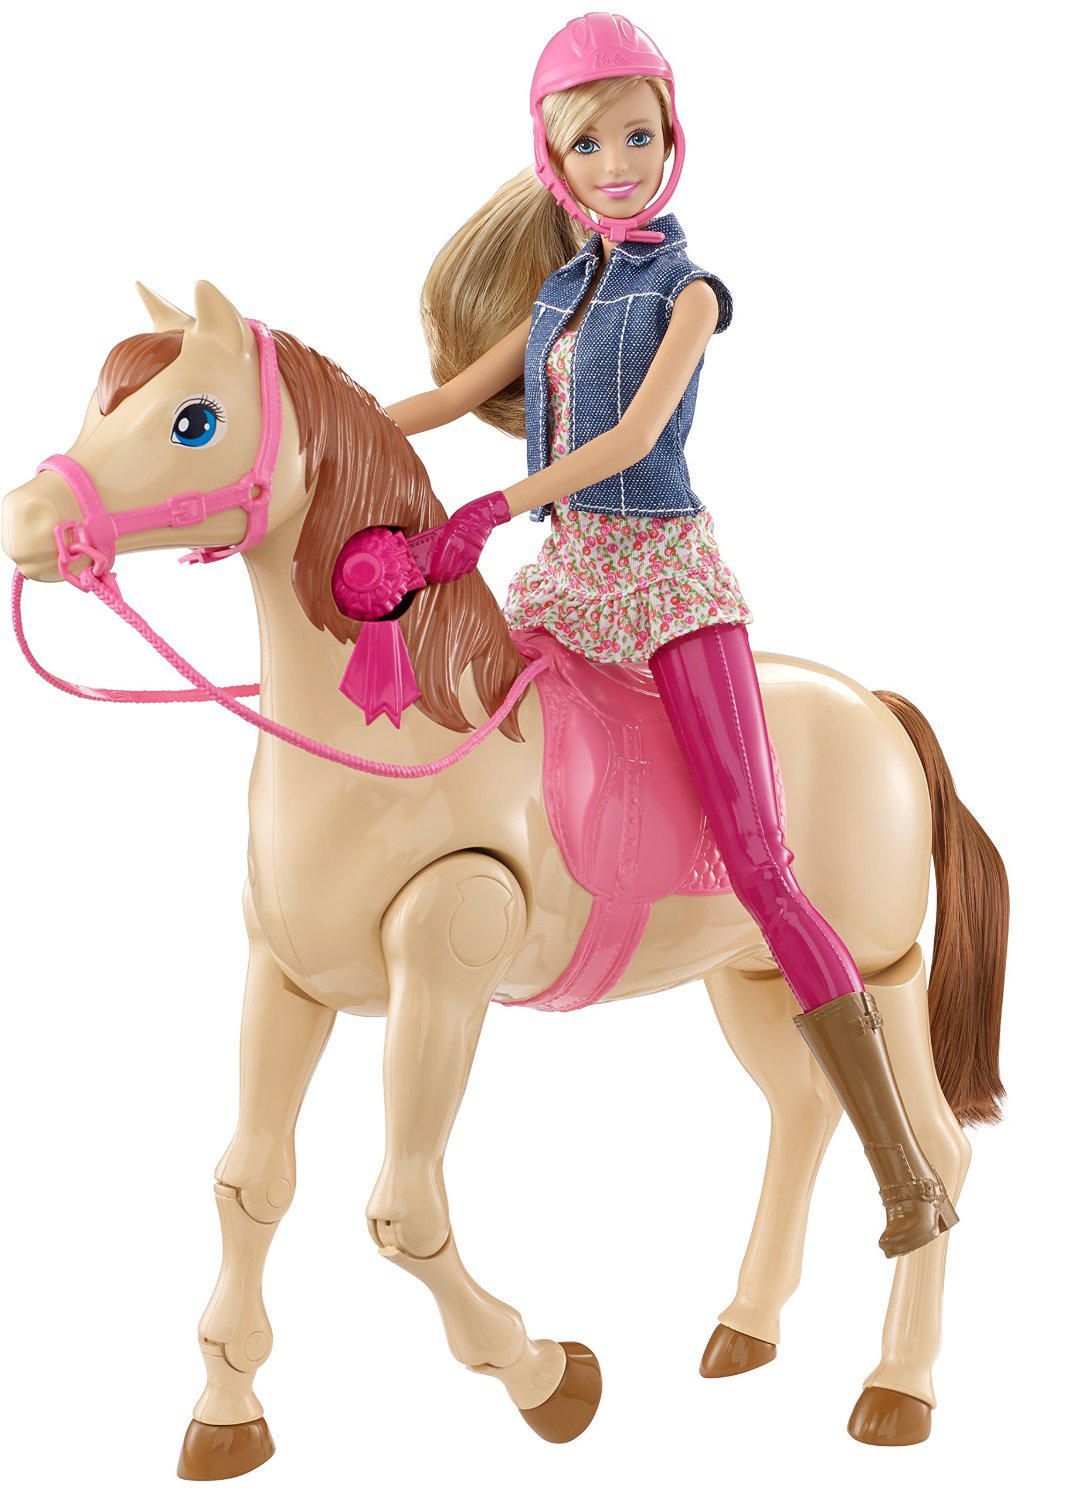 Barbie Saddle 'n Ride Barbie Doll & Horse Playset | Walmart Canada